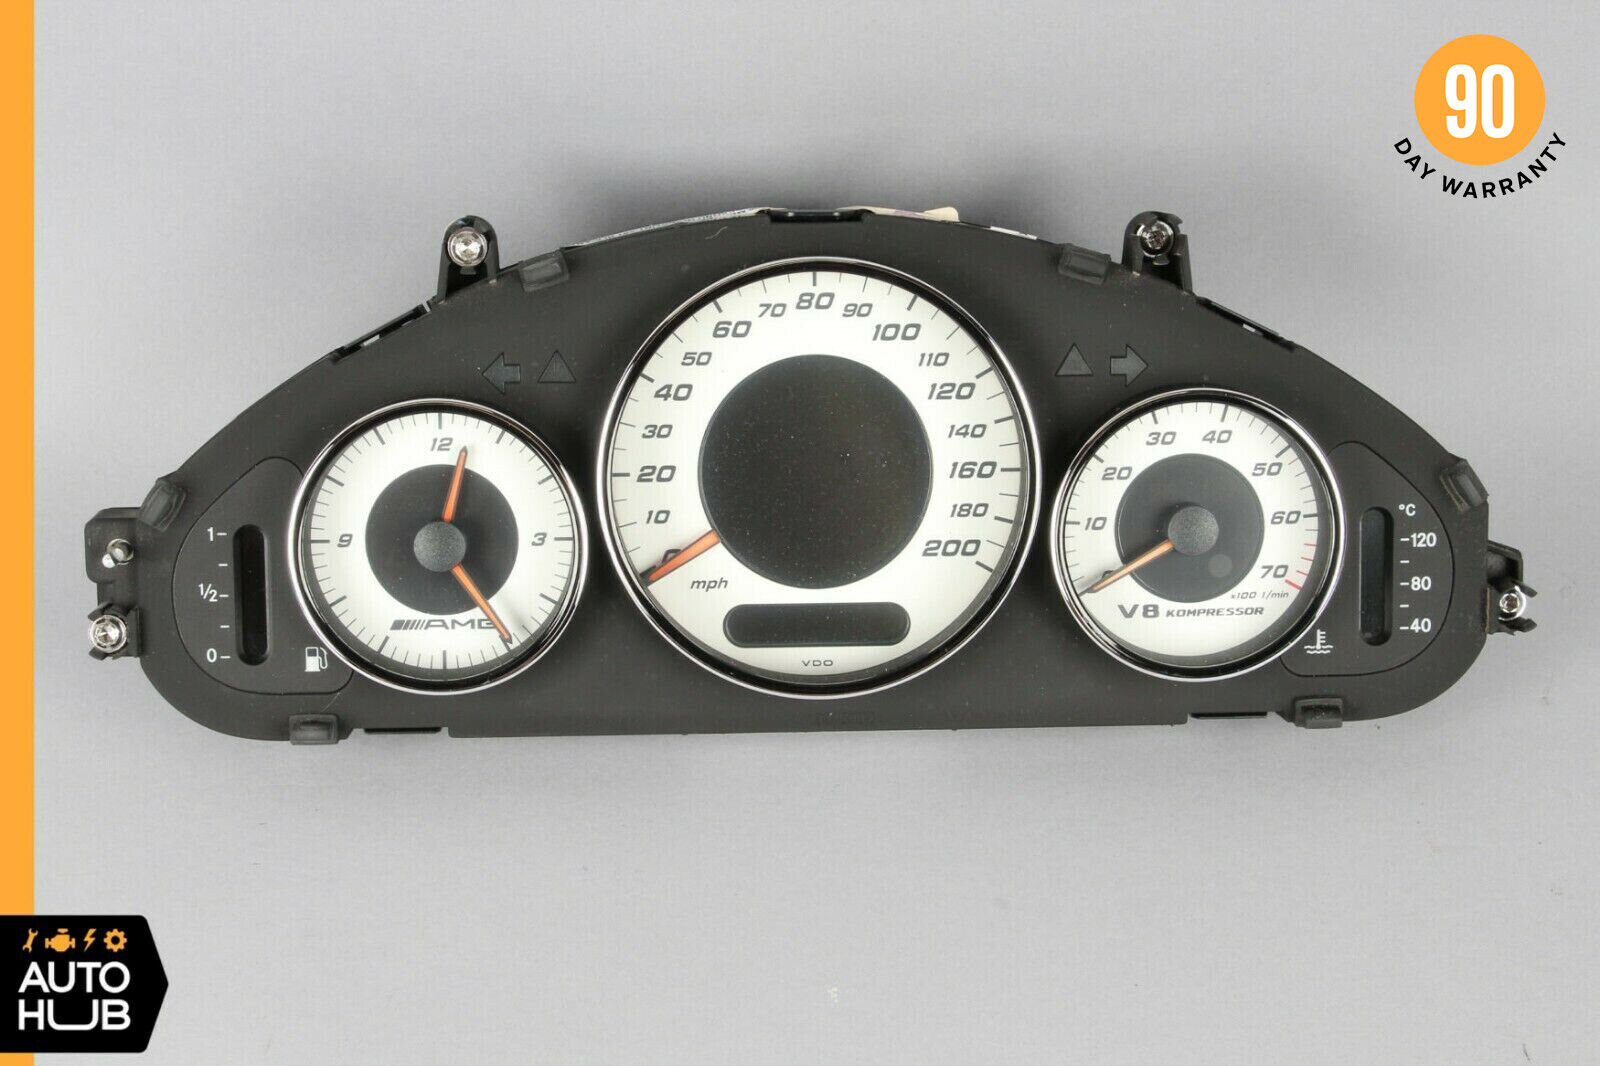 2006 Mercede W219 CLS55 AMG Instrument Cluster Speedometer 2195402811 OEM 180k